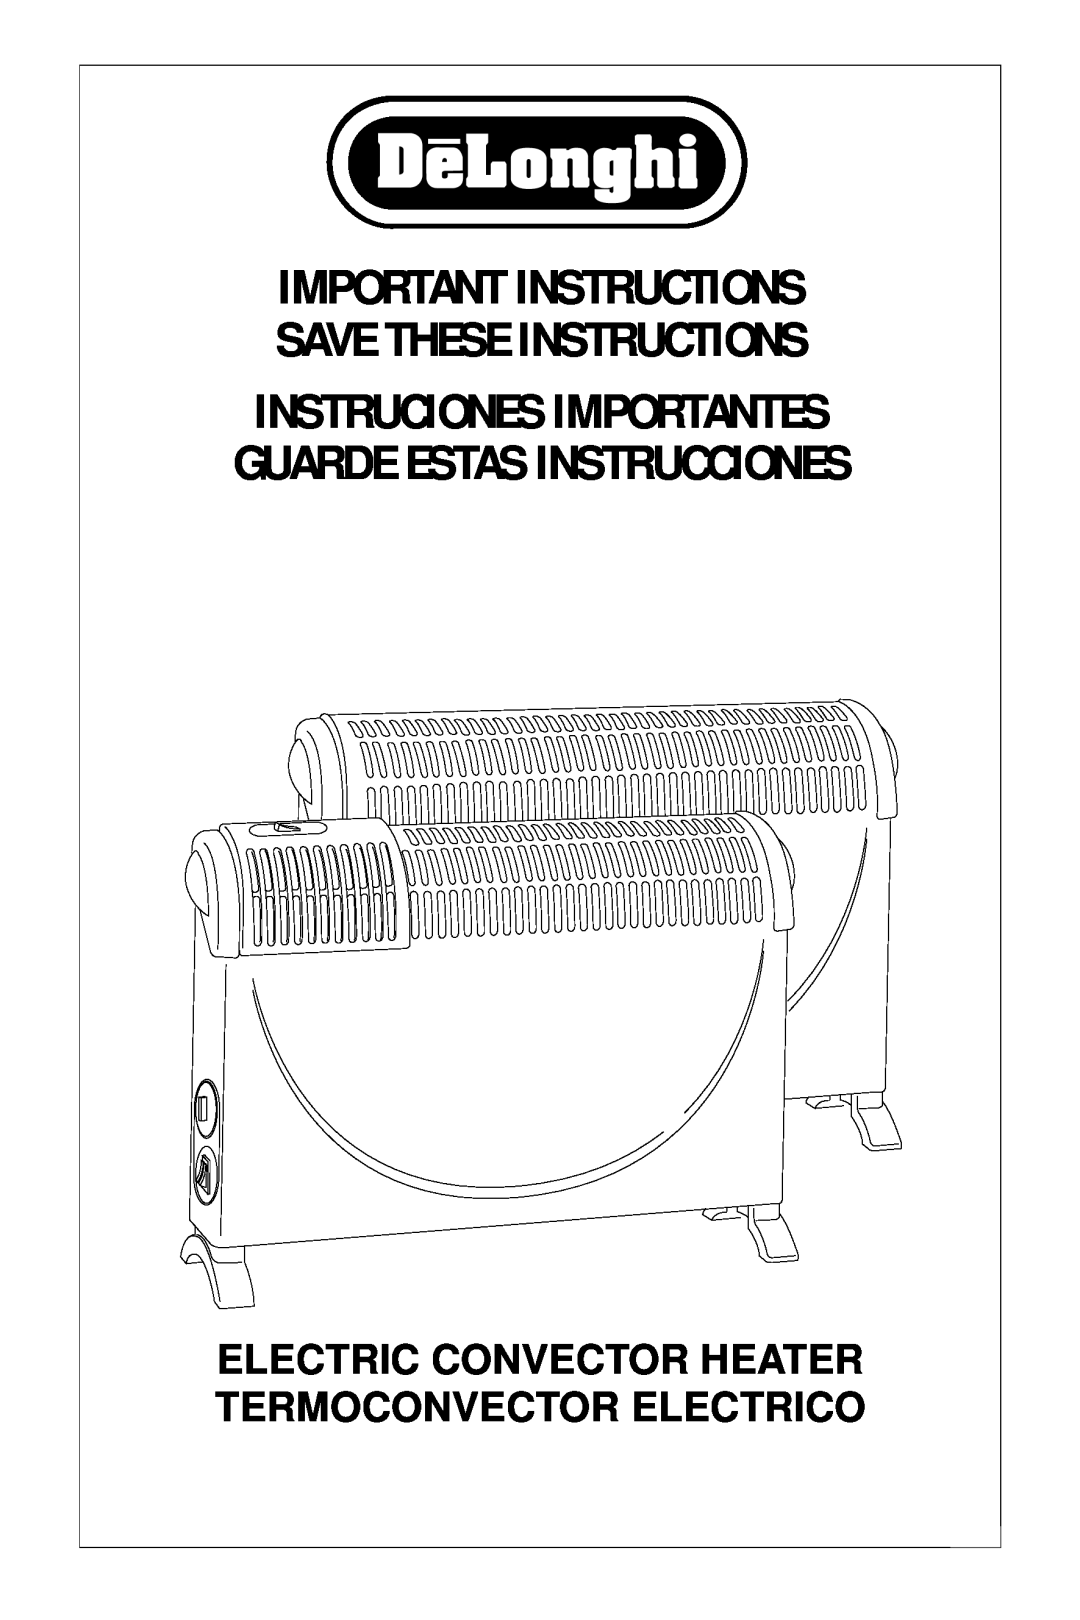 DeLonghi Electric Convector Heater manual Termoconvector Electrico, Important Instructions, Instruciones Importantes 